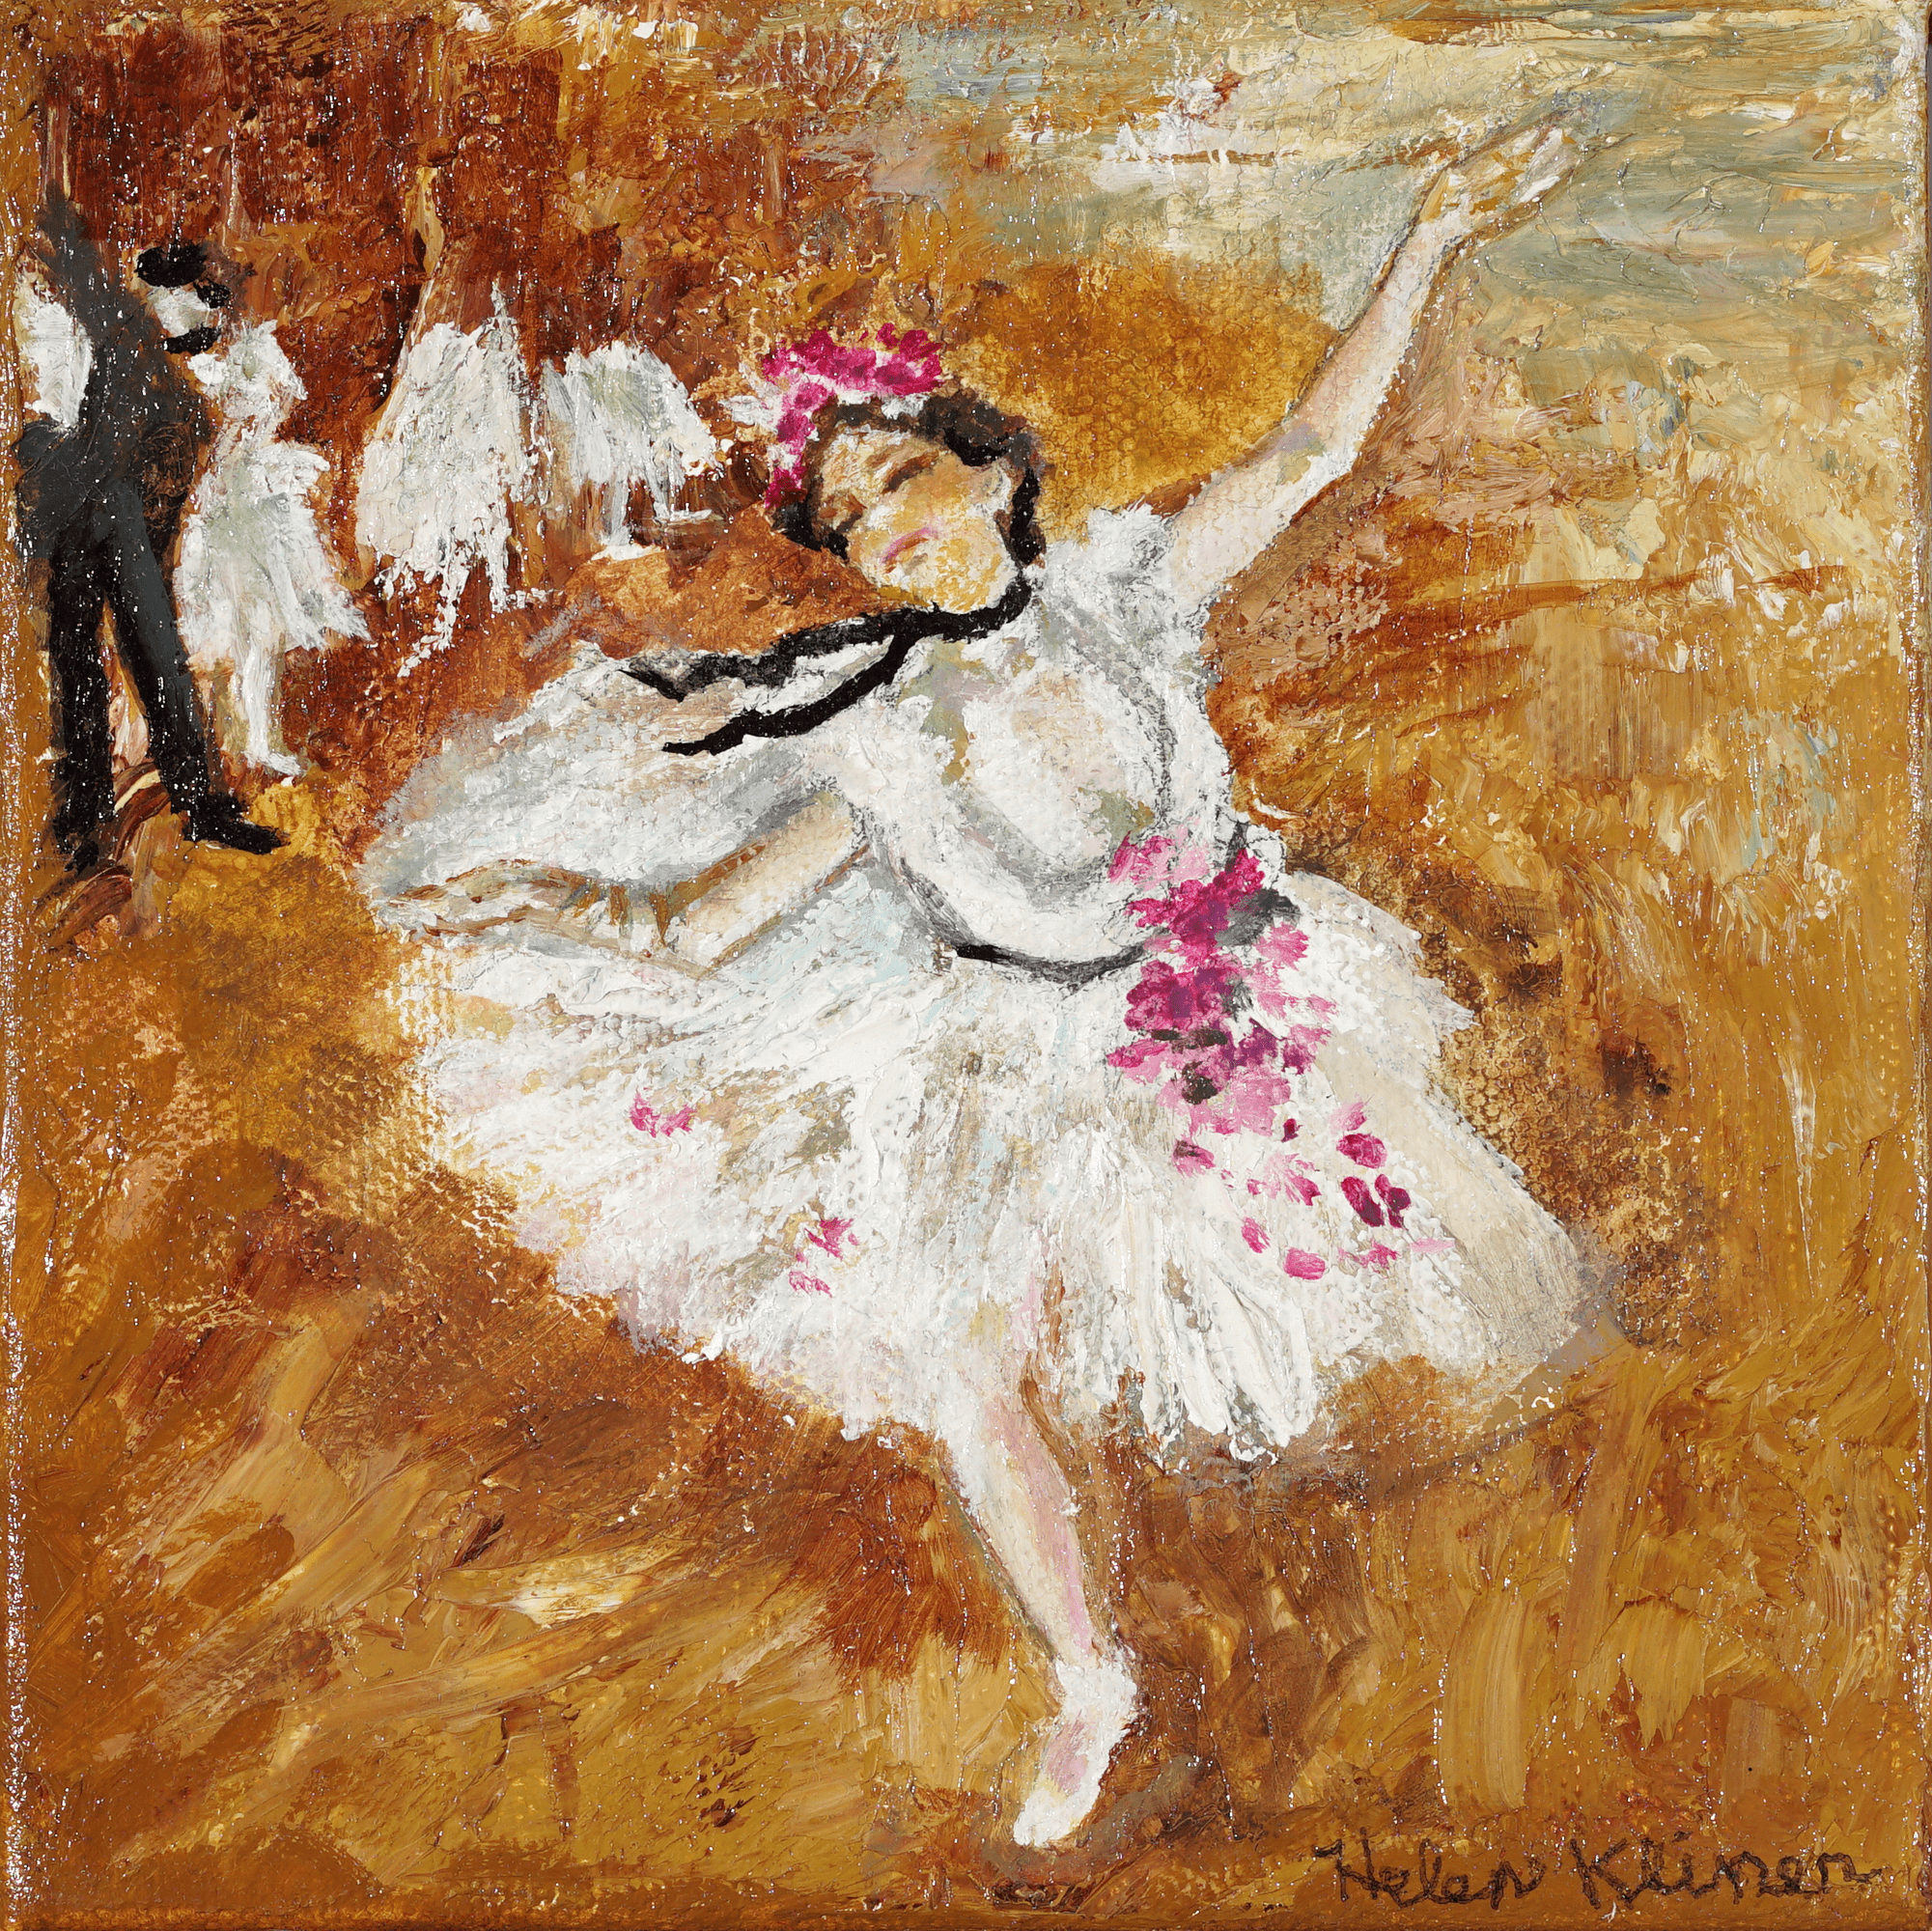 Helen Kliner, The Joy of Dance, after Degas, oil